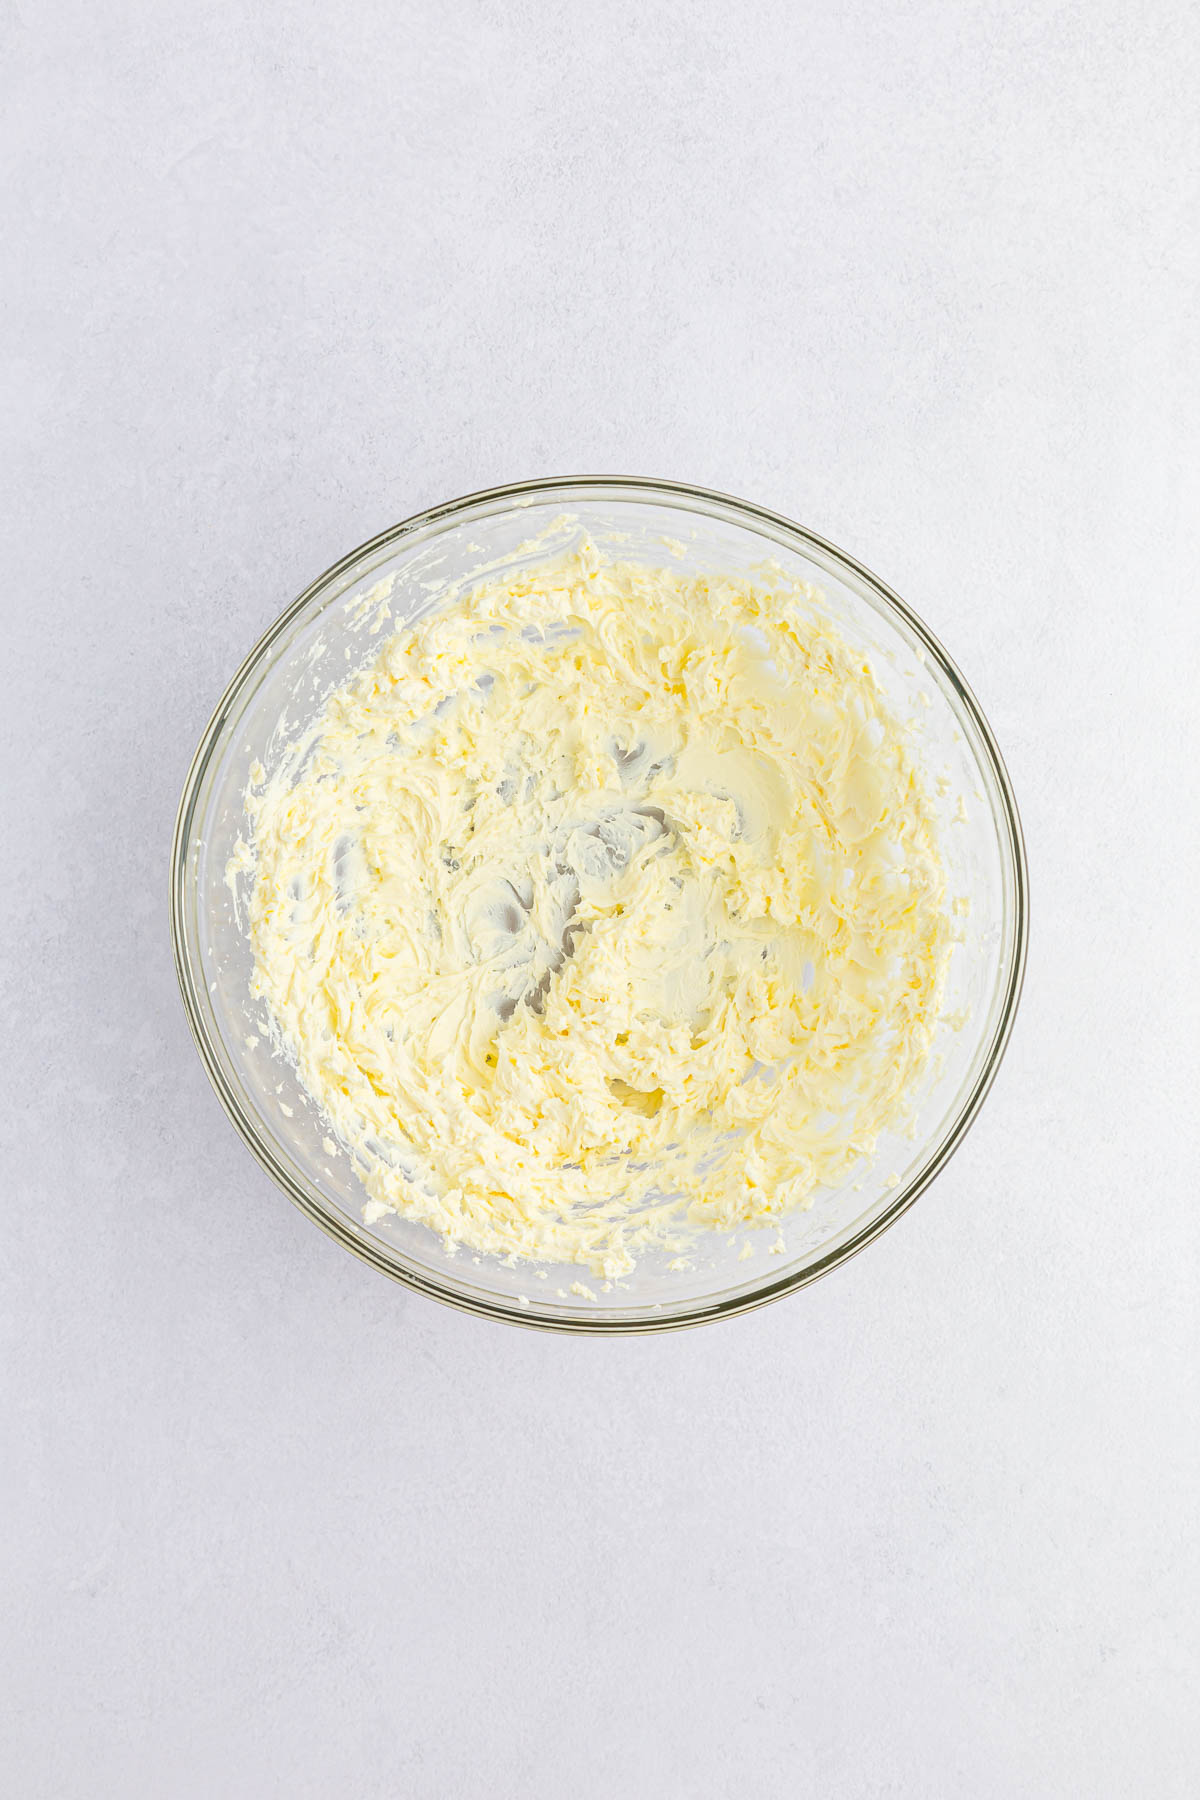 Cream cheese beaten in glass mixing bowl